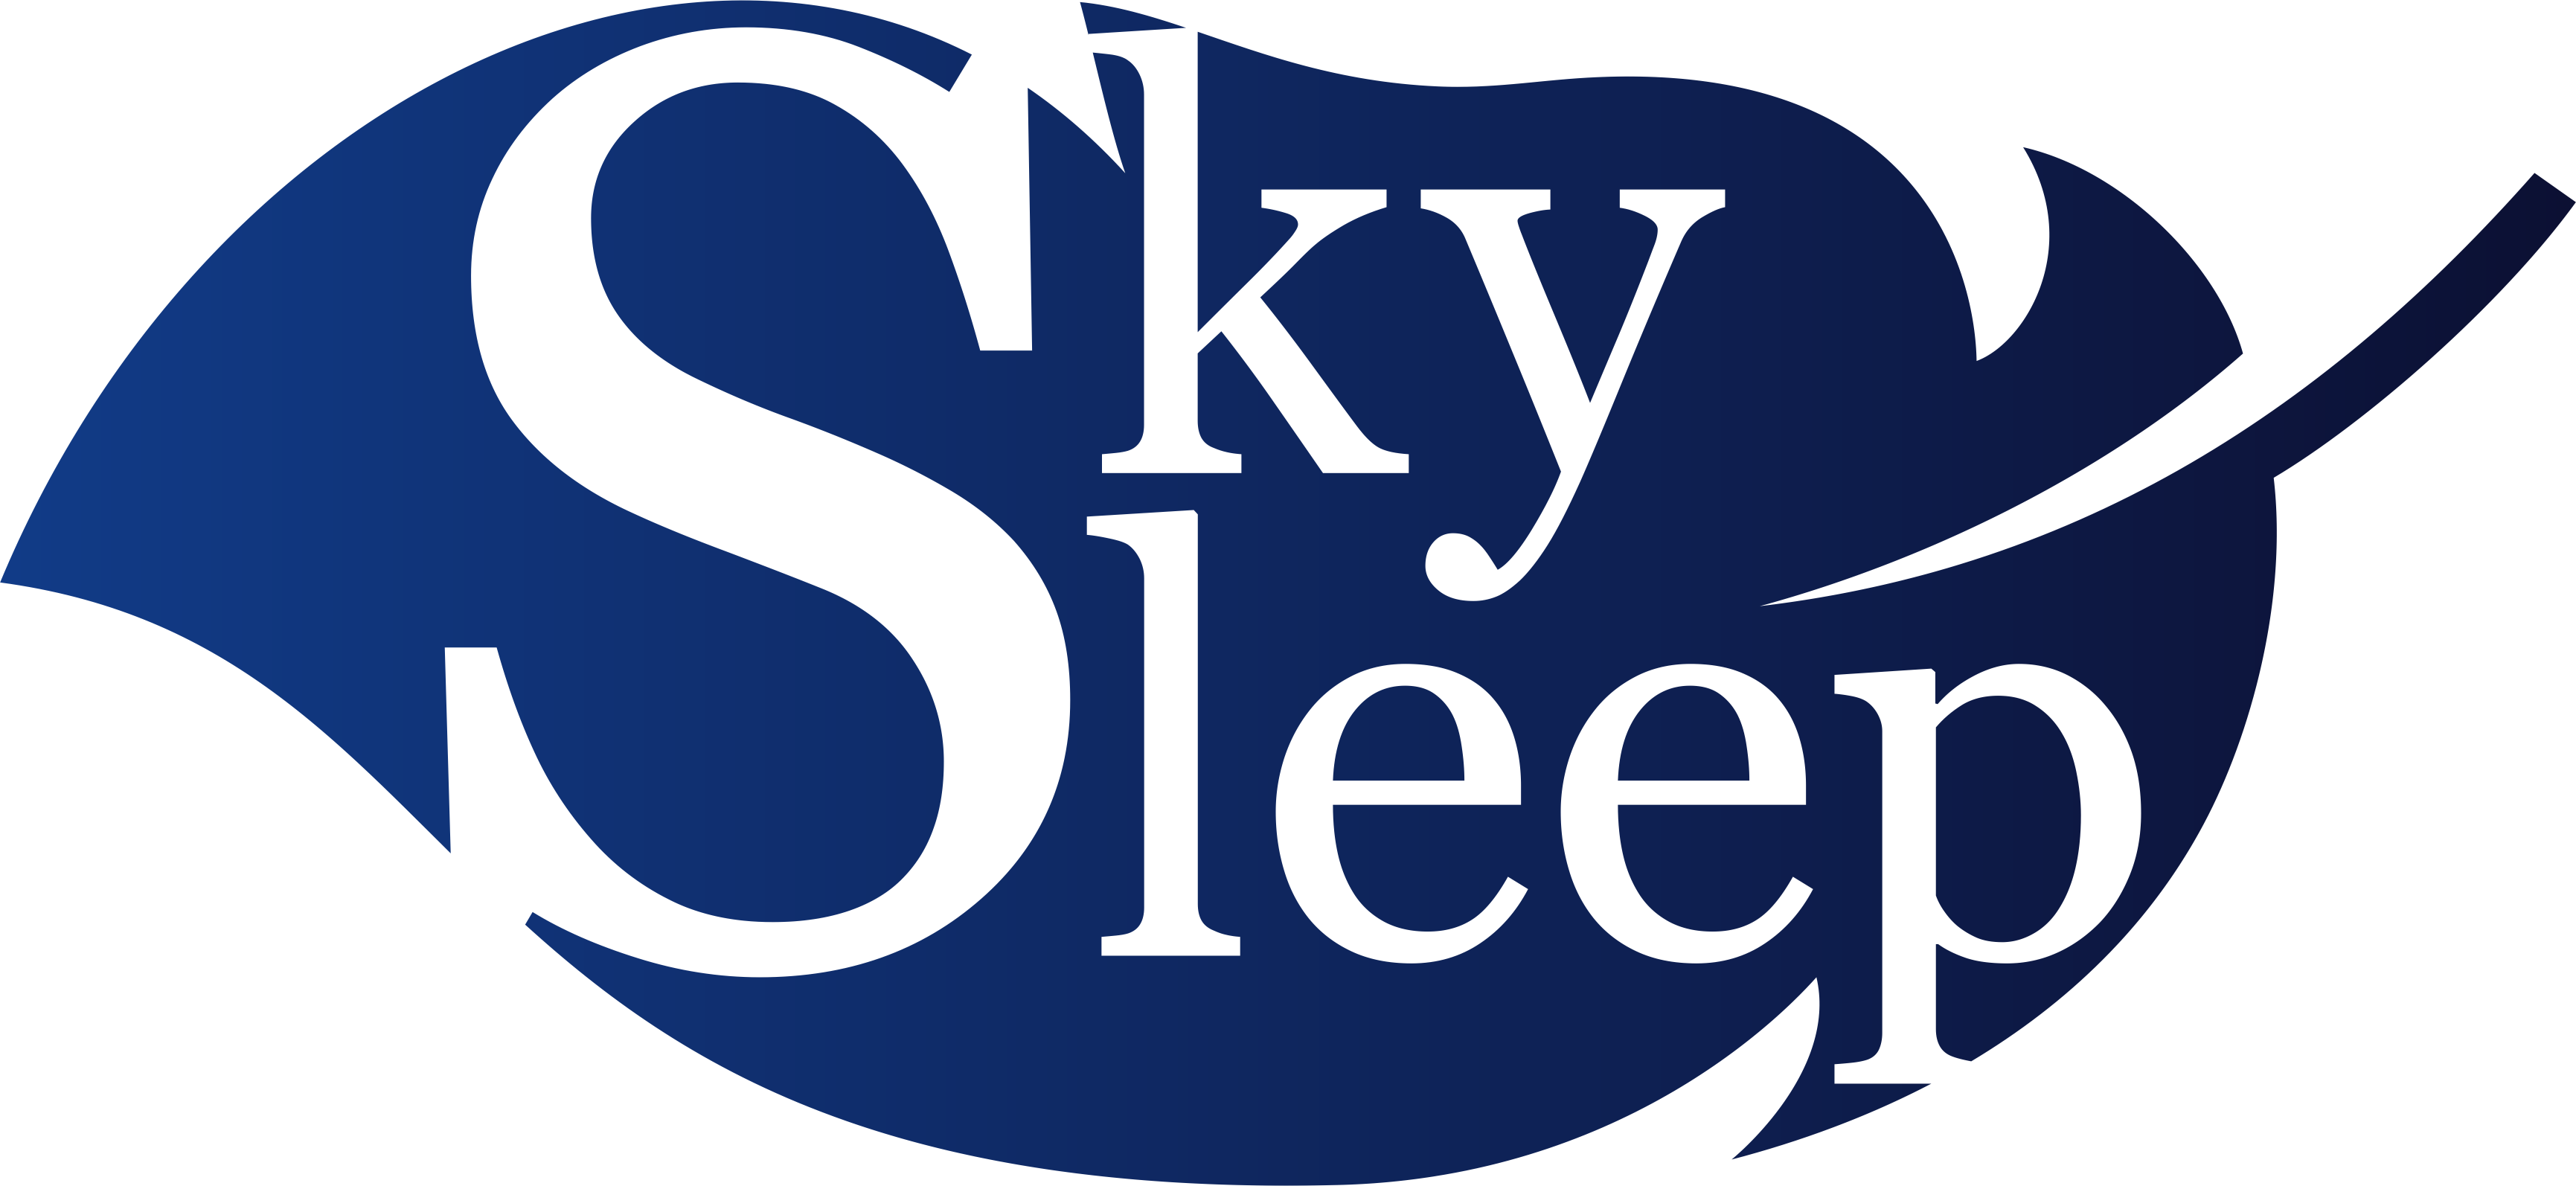 SkySleep